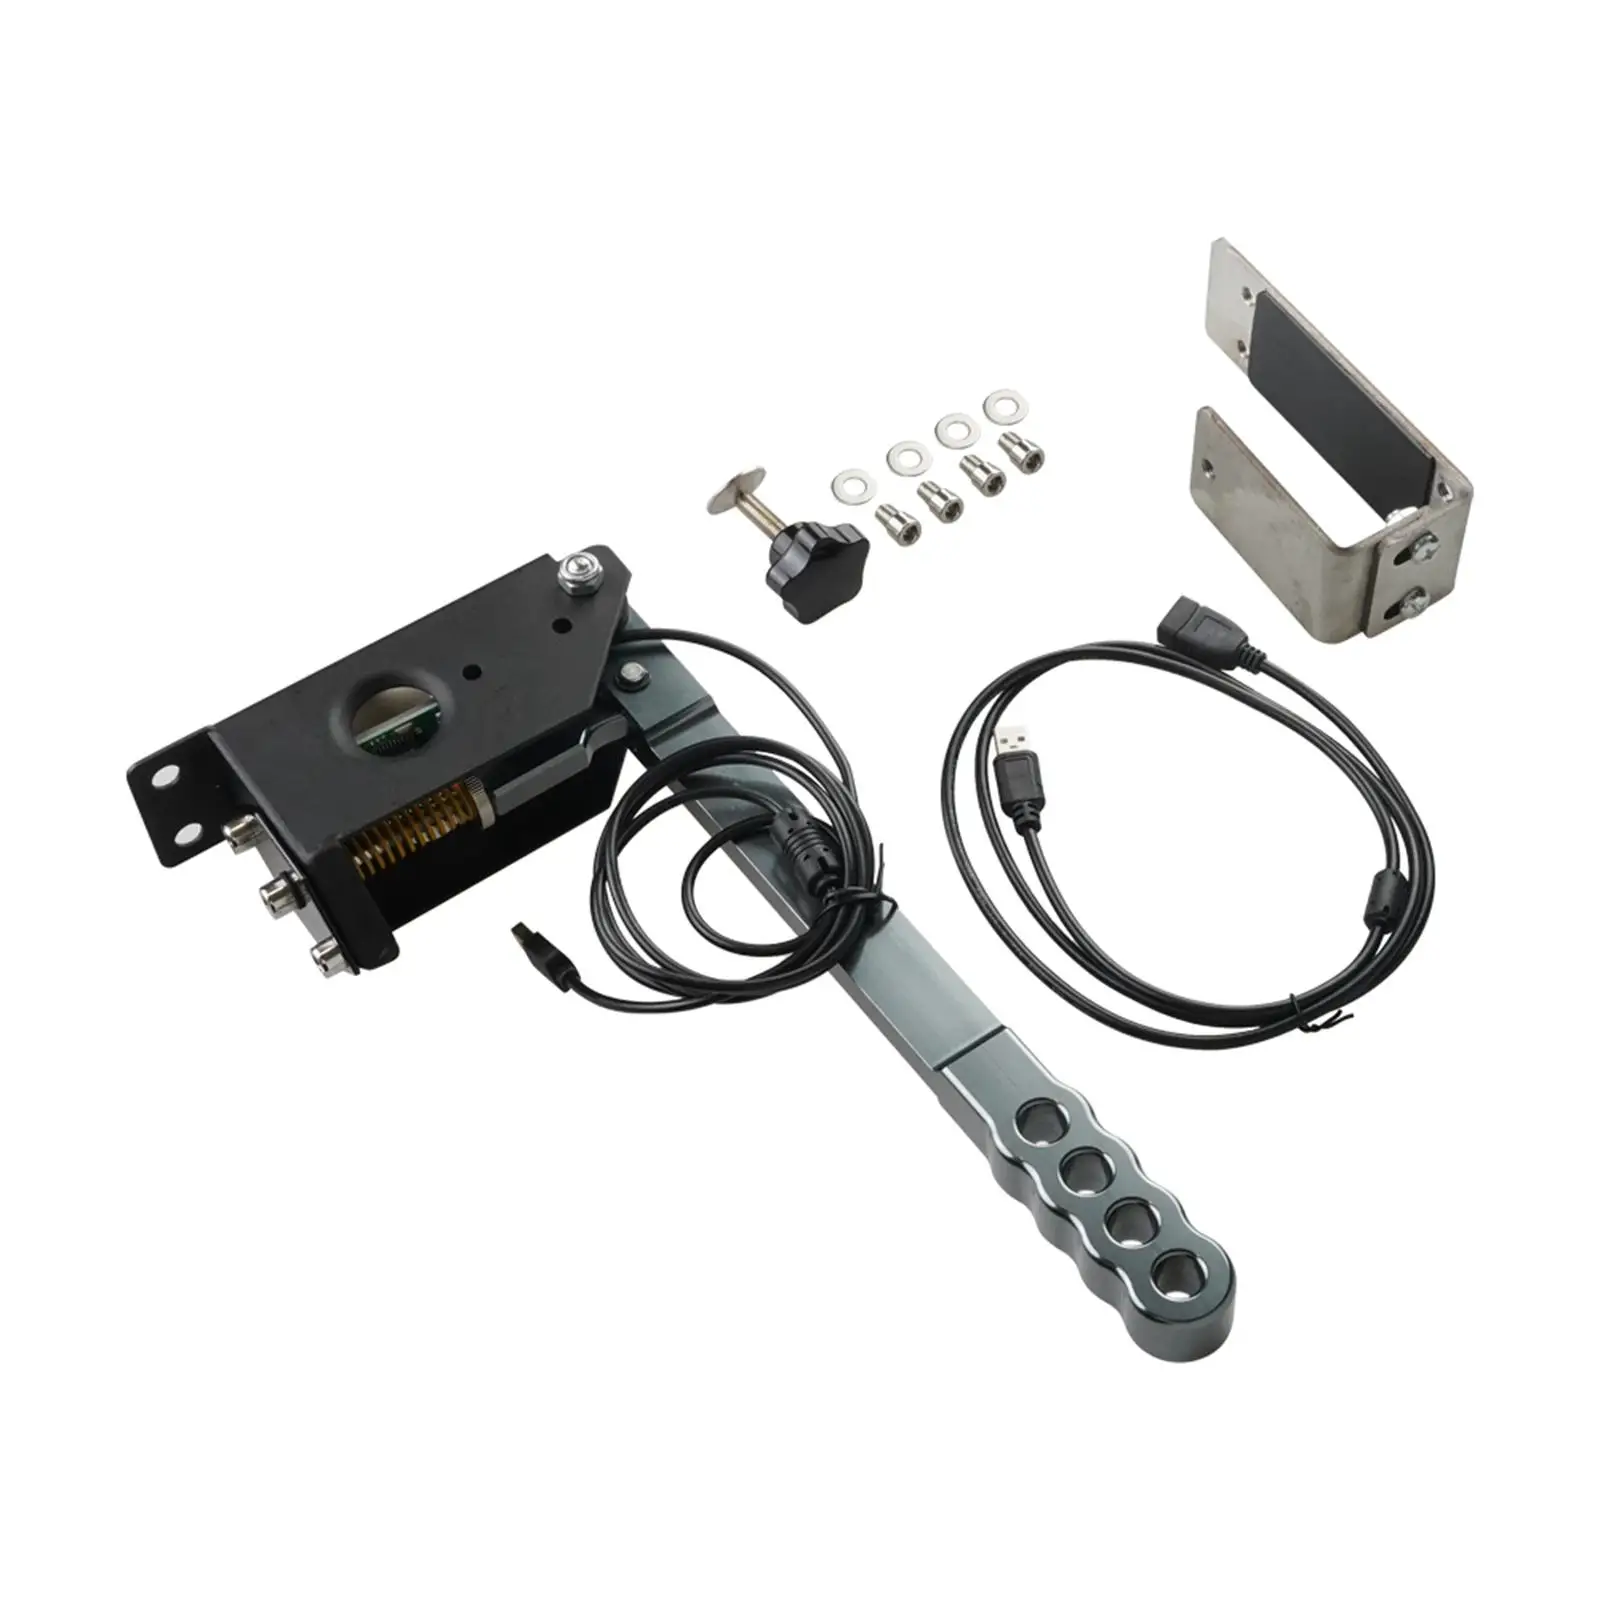 Handbrake Durable USB Anti Wear Plug and Play 14 Bit Spare Parts Handbrake Clamp for Logitech G29 Racing Games G27 G25 PC